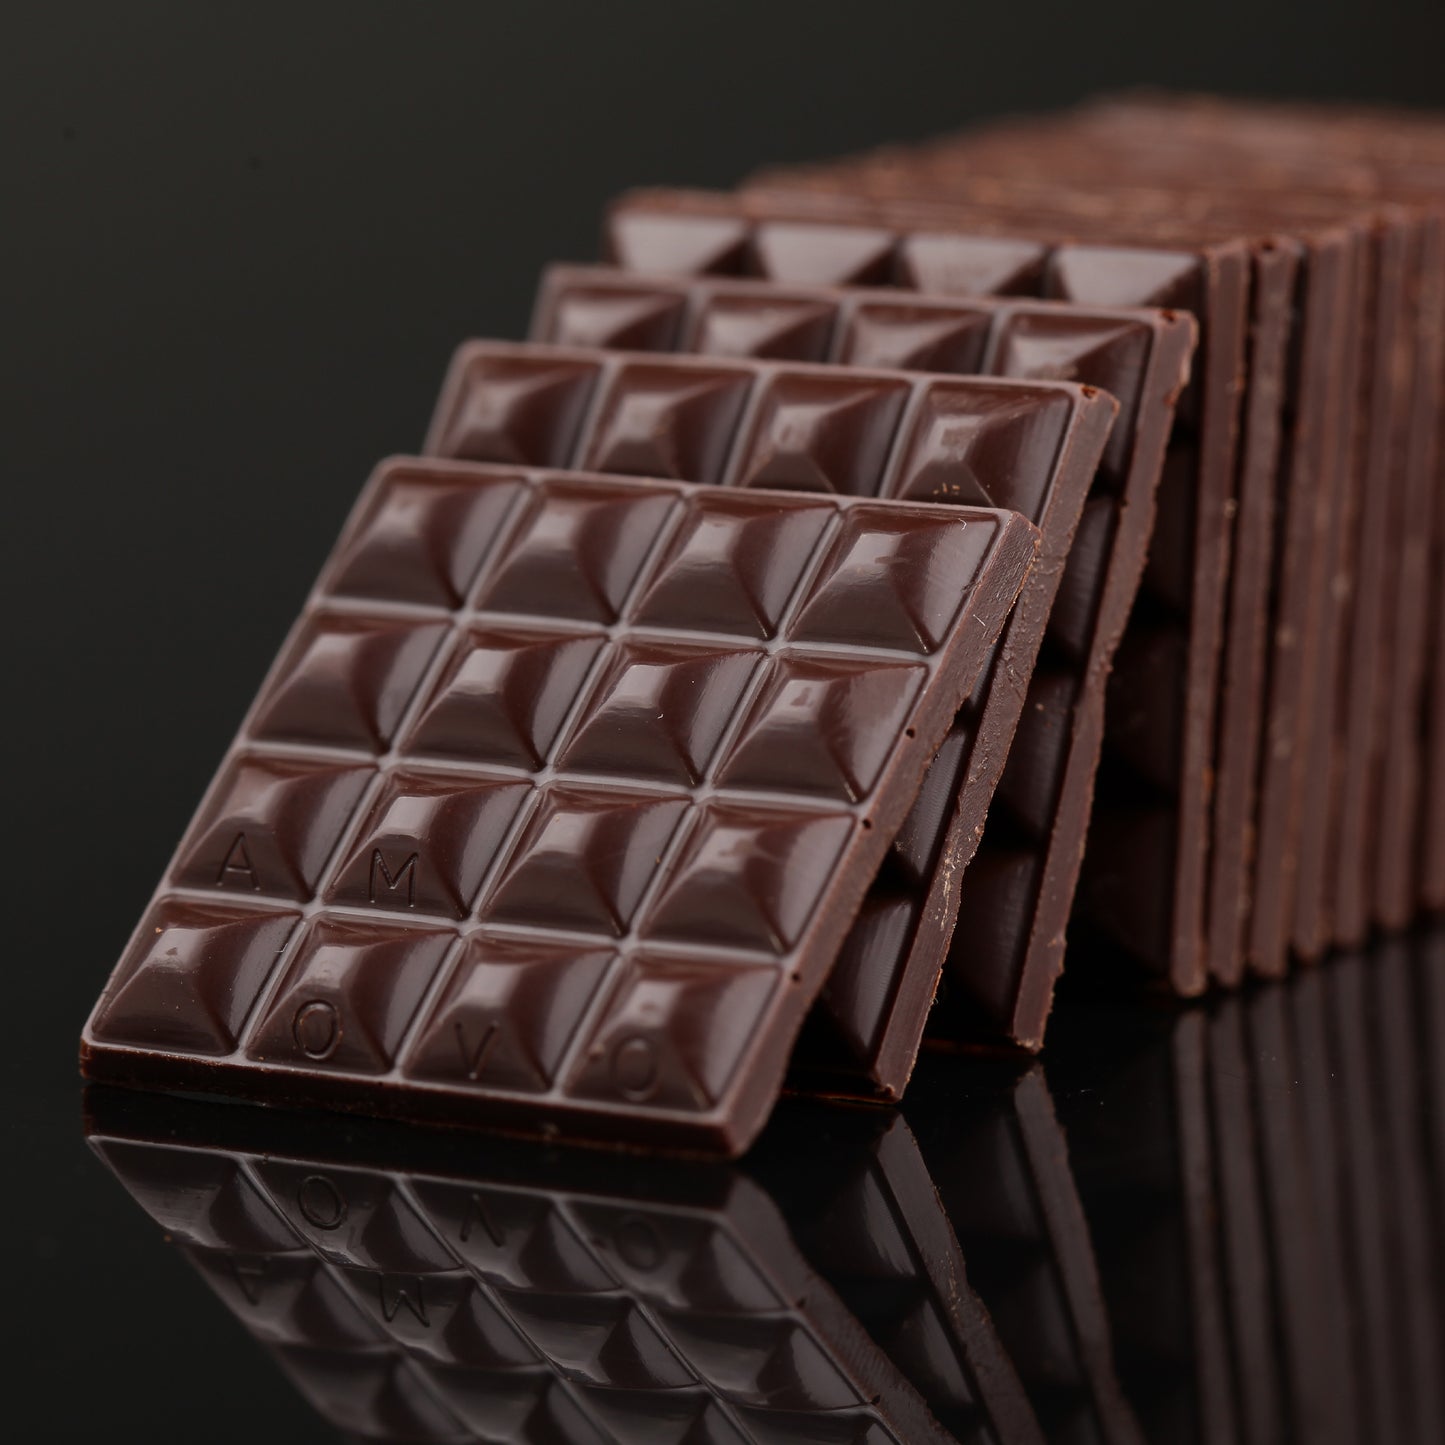 A photo of dark chocolate 